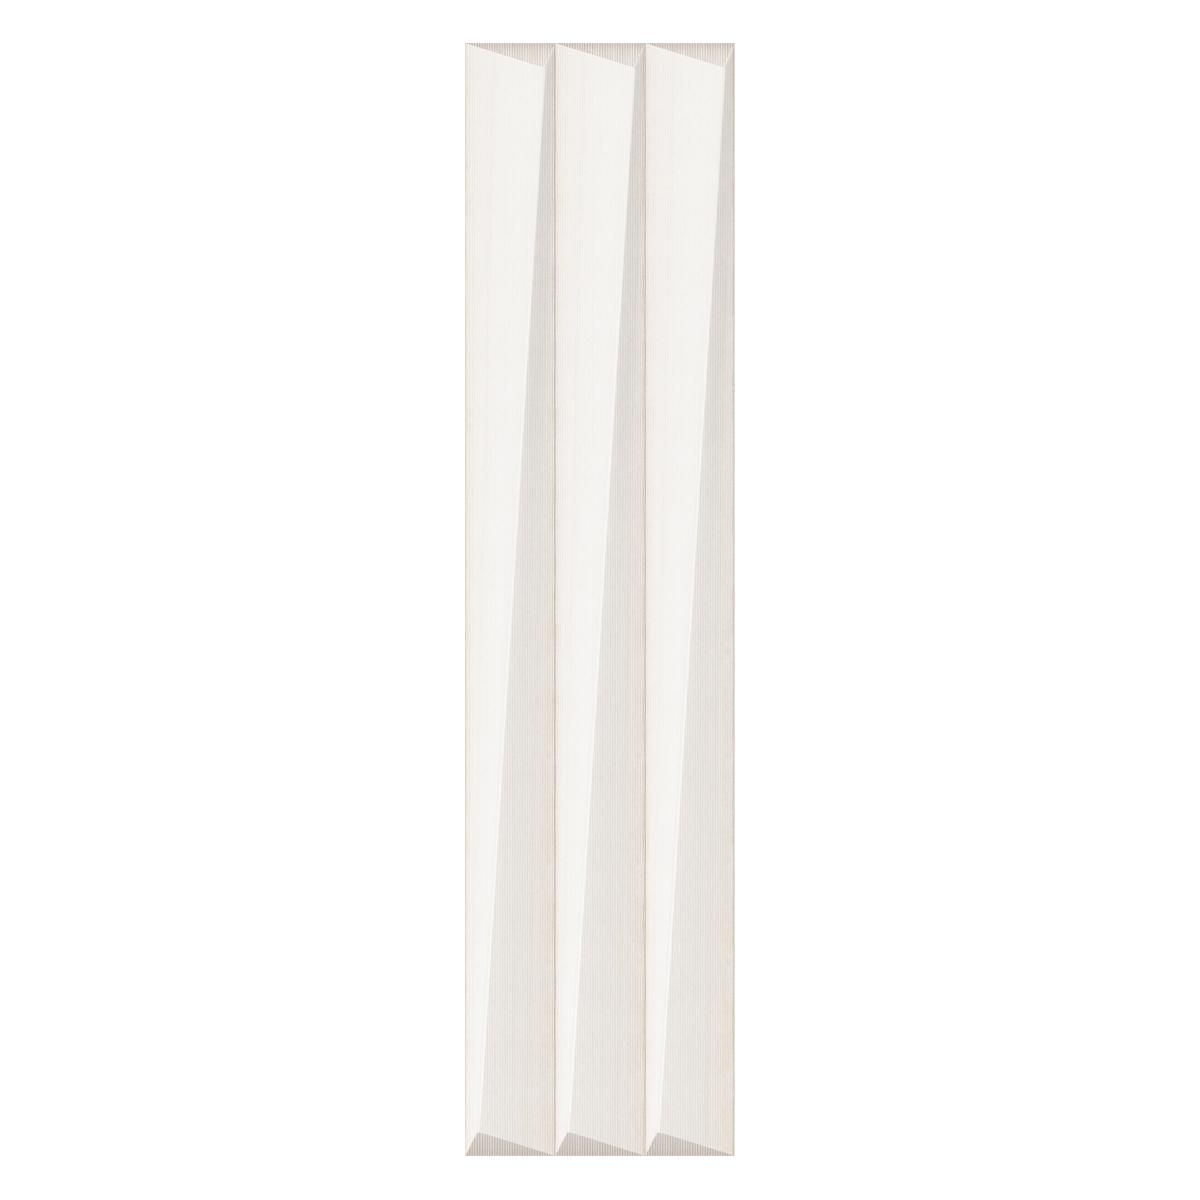 Porcelanato Coluna Linea Blanco Mate - 28.8X119 cm - 1.03 m2